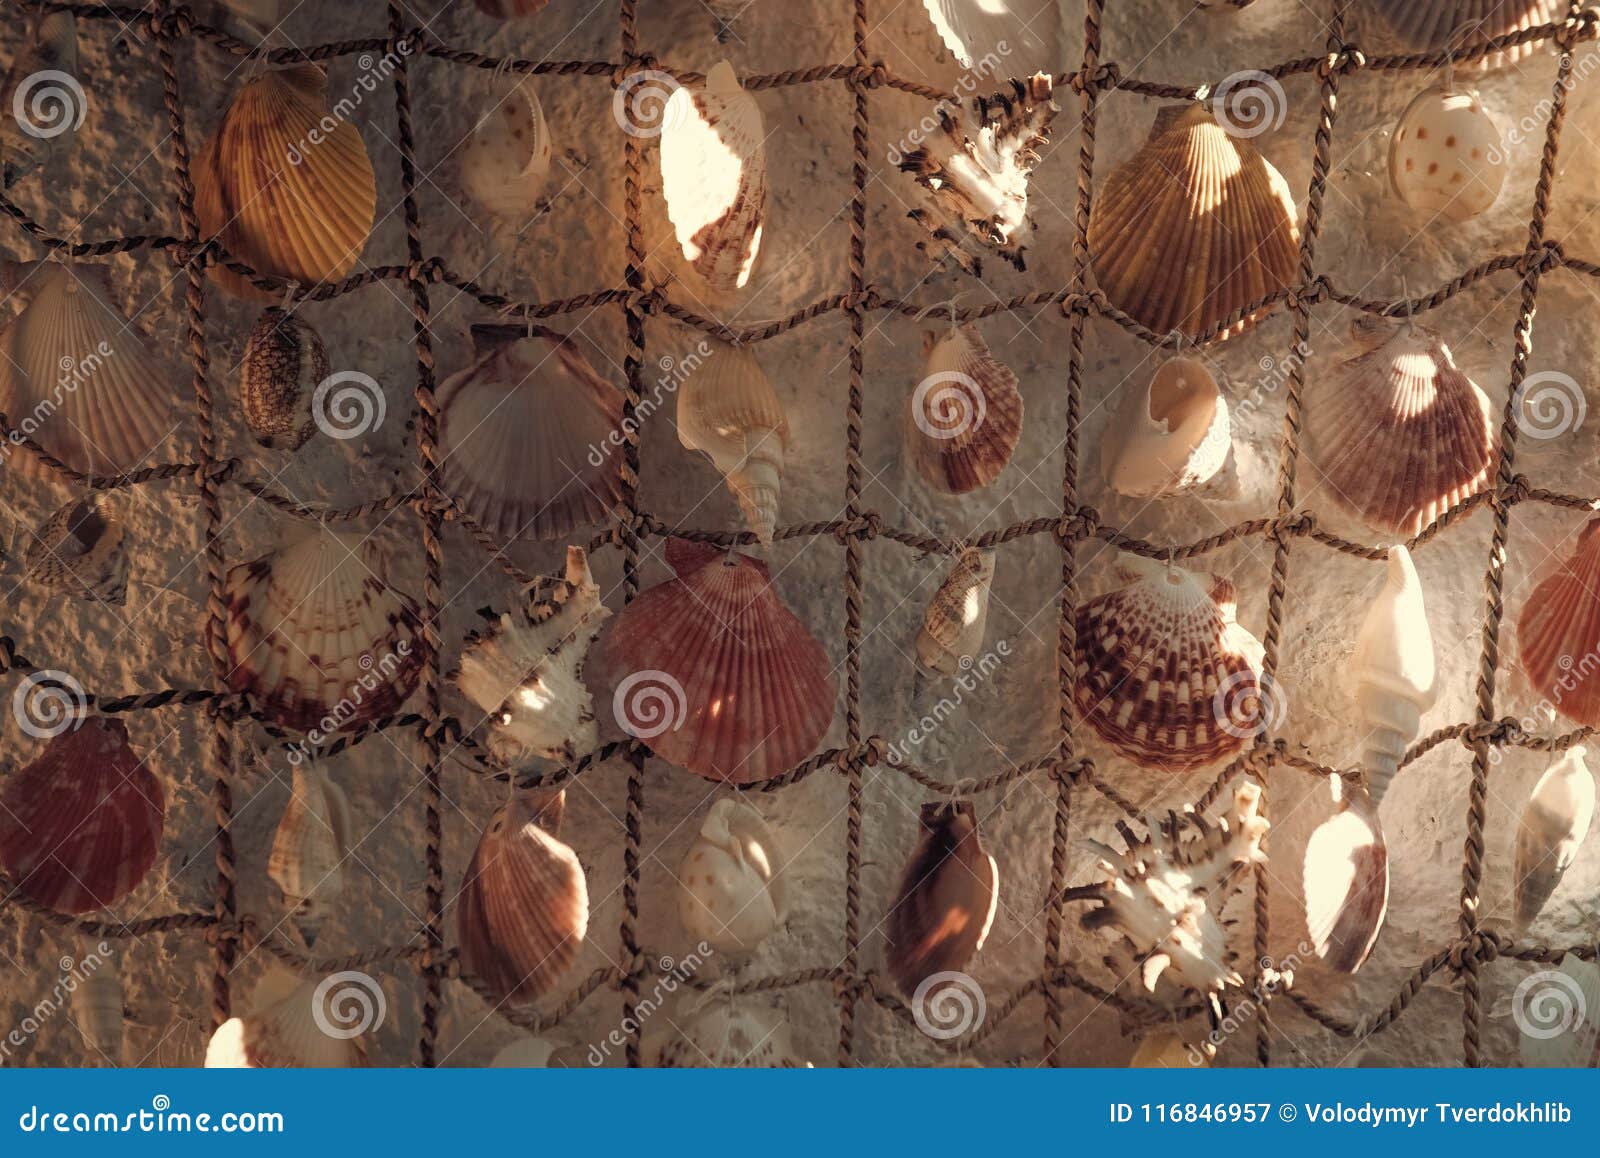 Network with Beautiful Seashells As Decor. Fishing, Fishing Net with  Seashells. Decor and Sea Concept Stock Image - Image of beauty, mollusk:  116846957